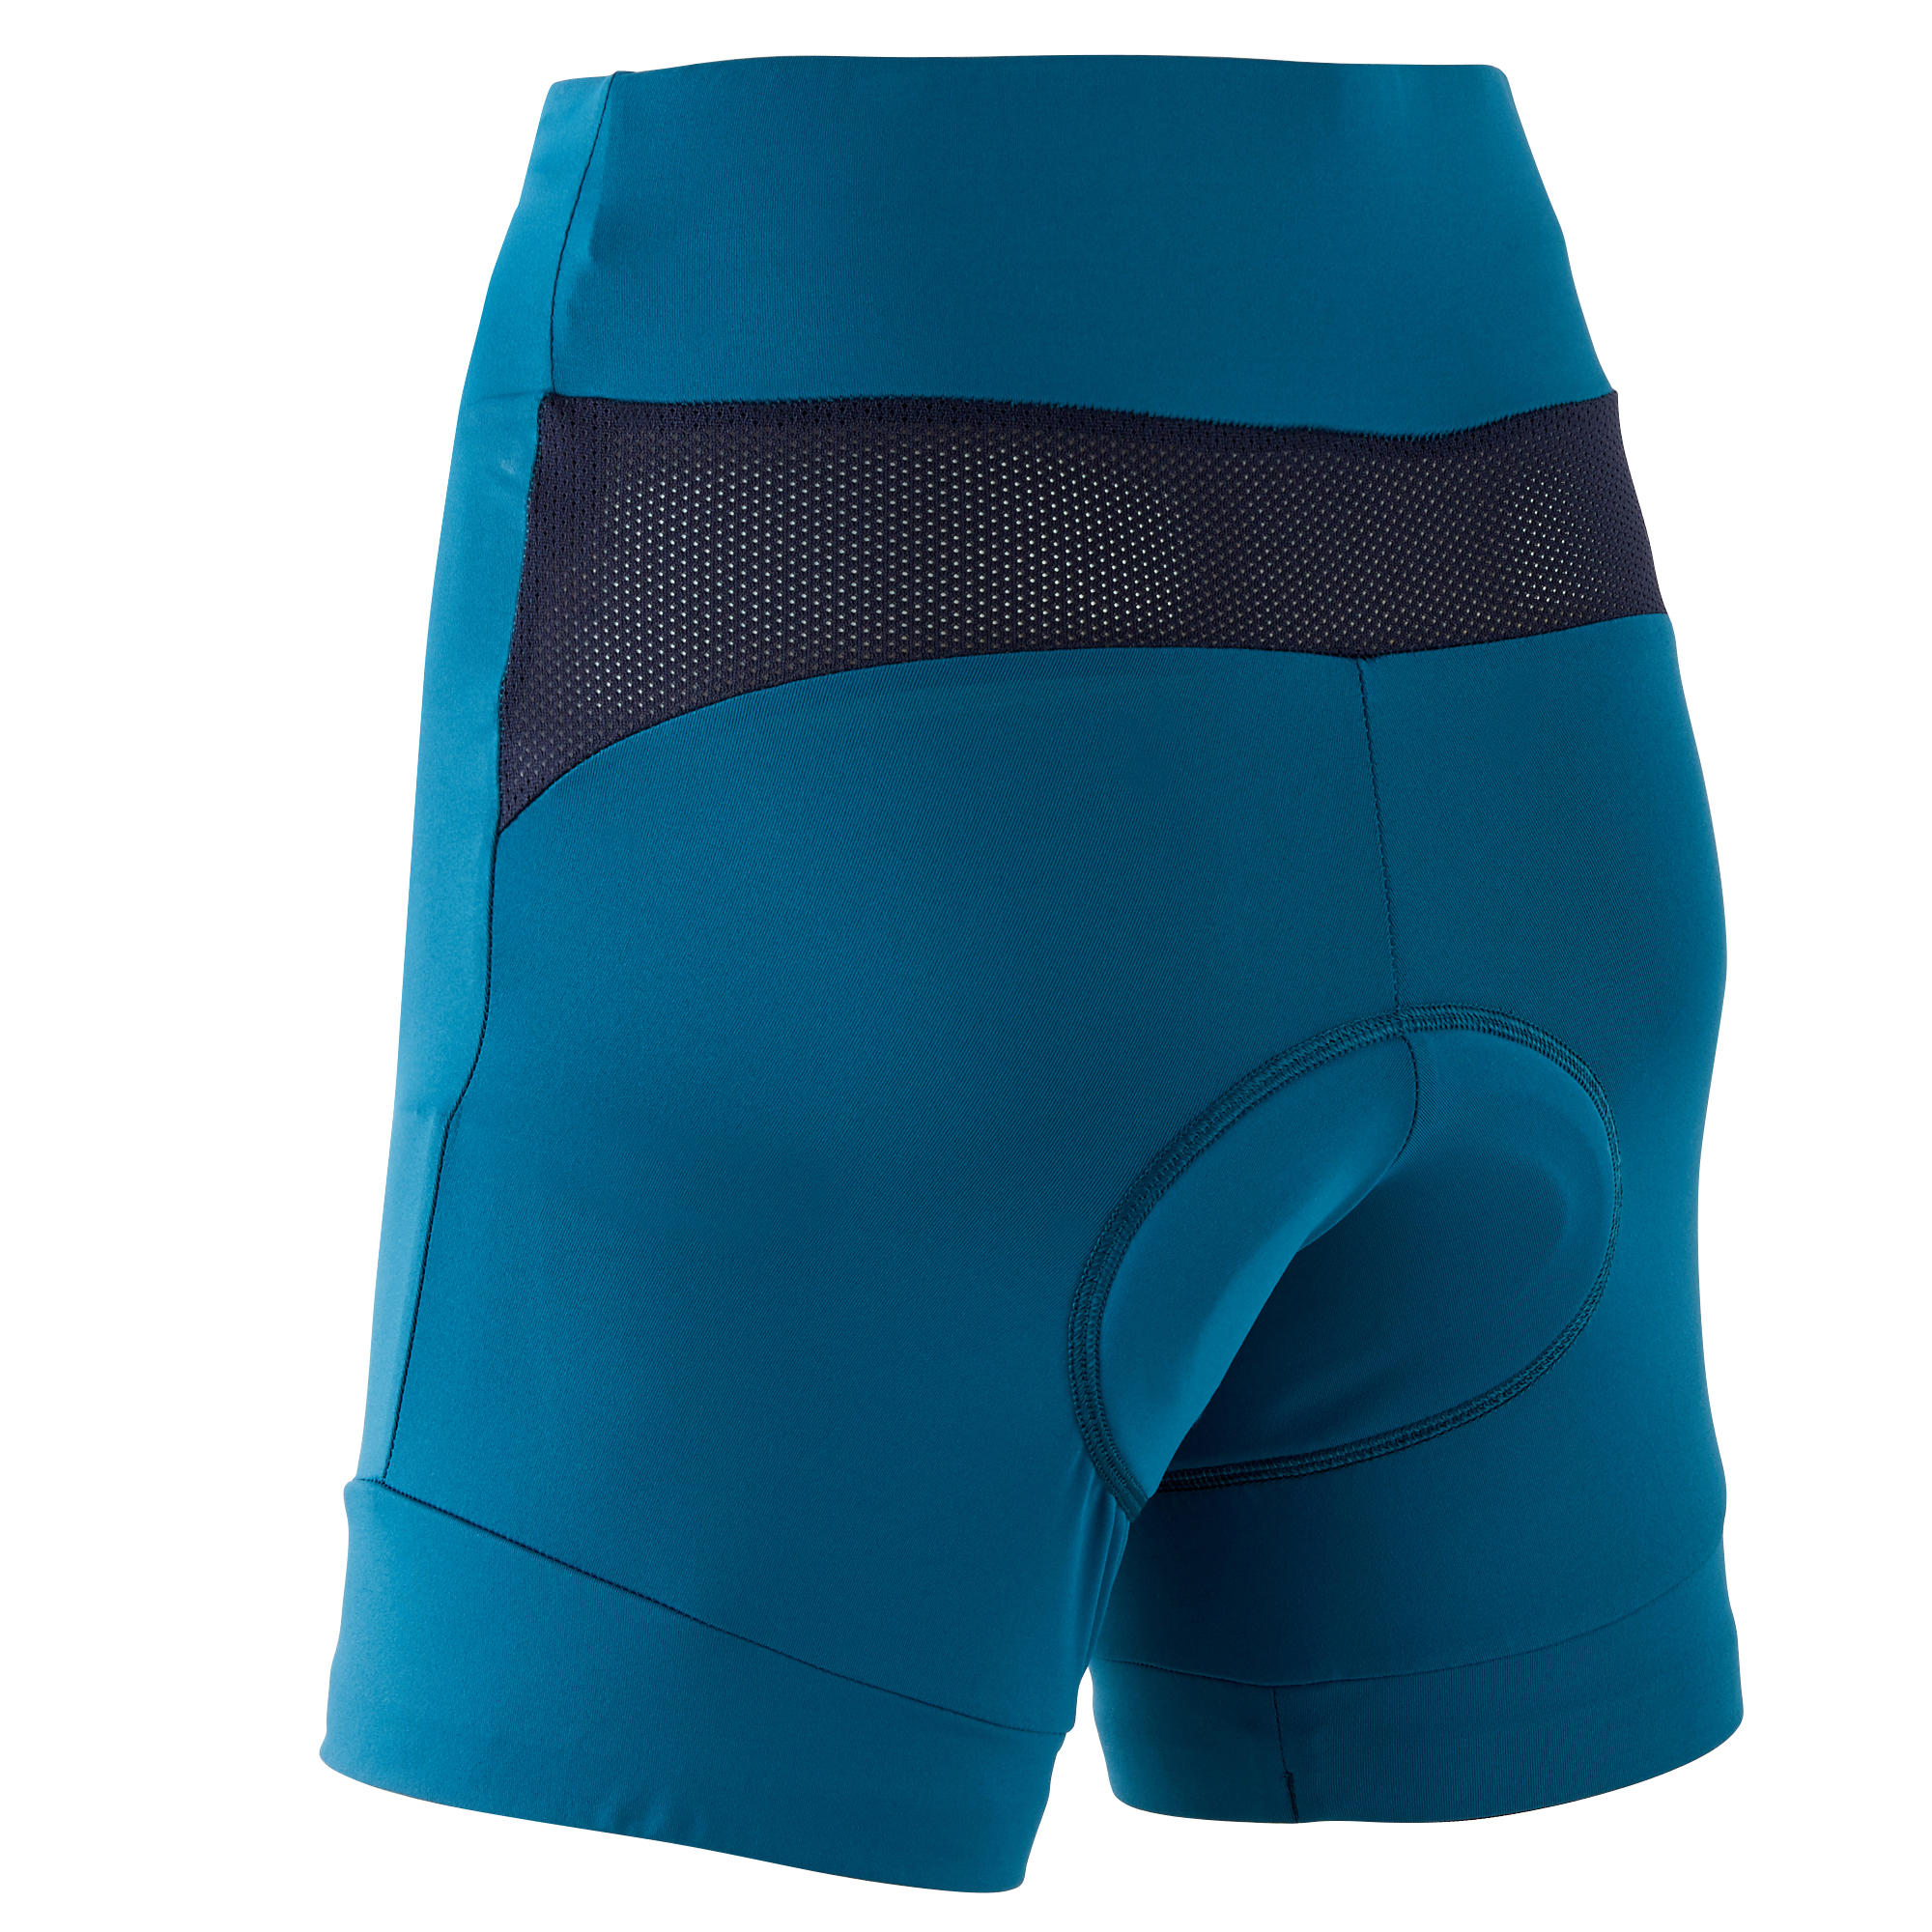 Women's Mountain Bike Shorts ST 500 - Blue 8/11